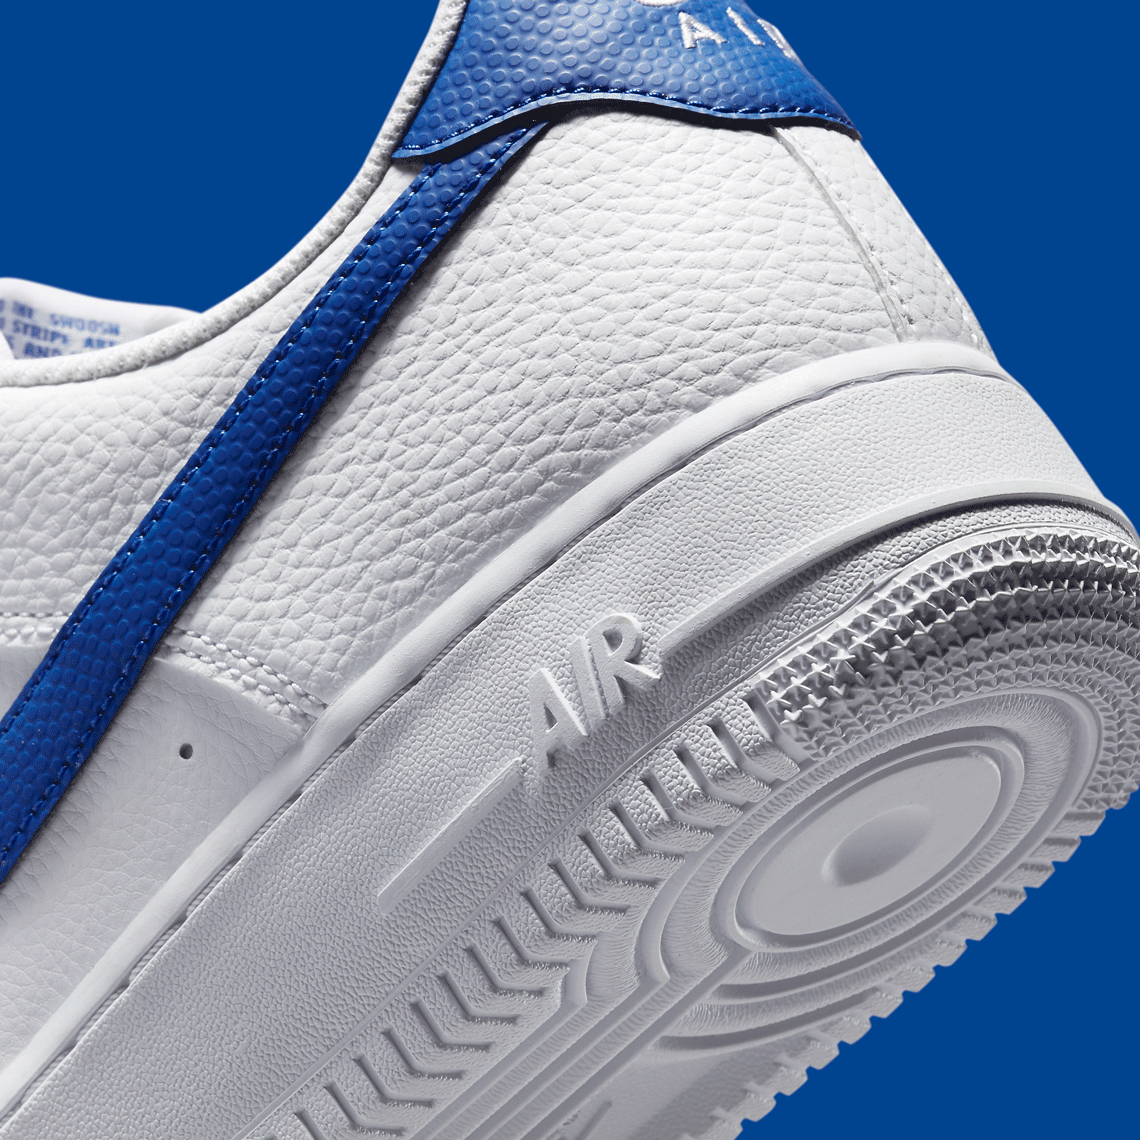 Nike Air Force 1/1 White & Royal Blue, DB4545-105